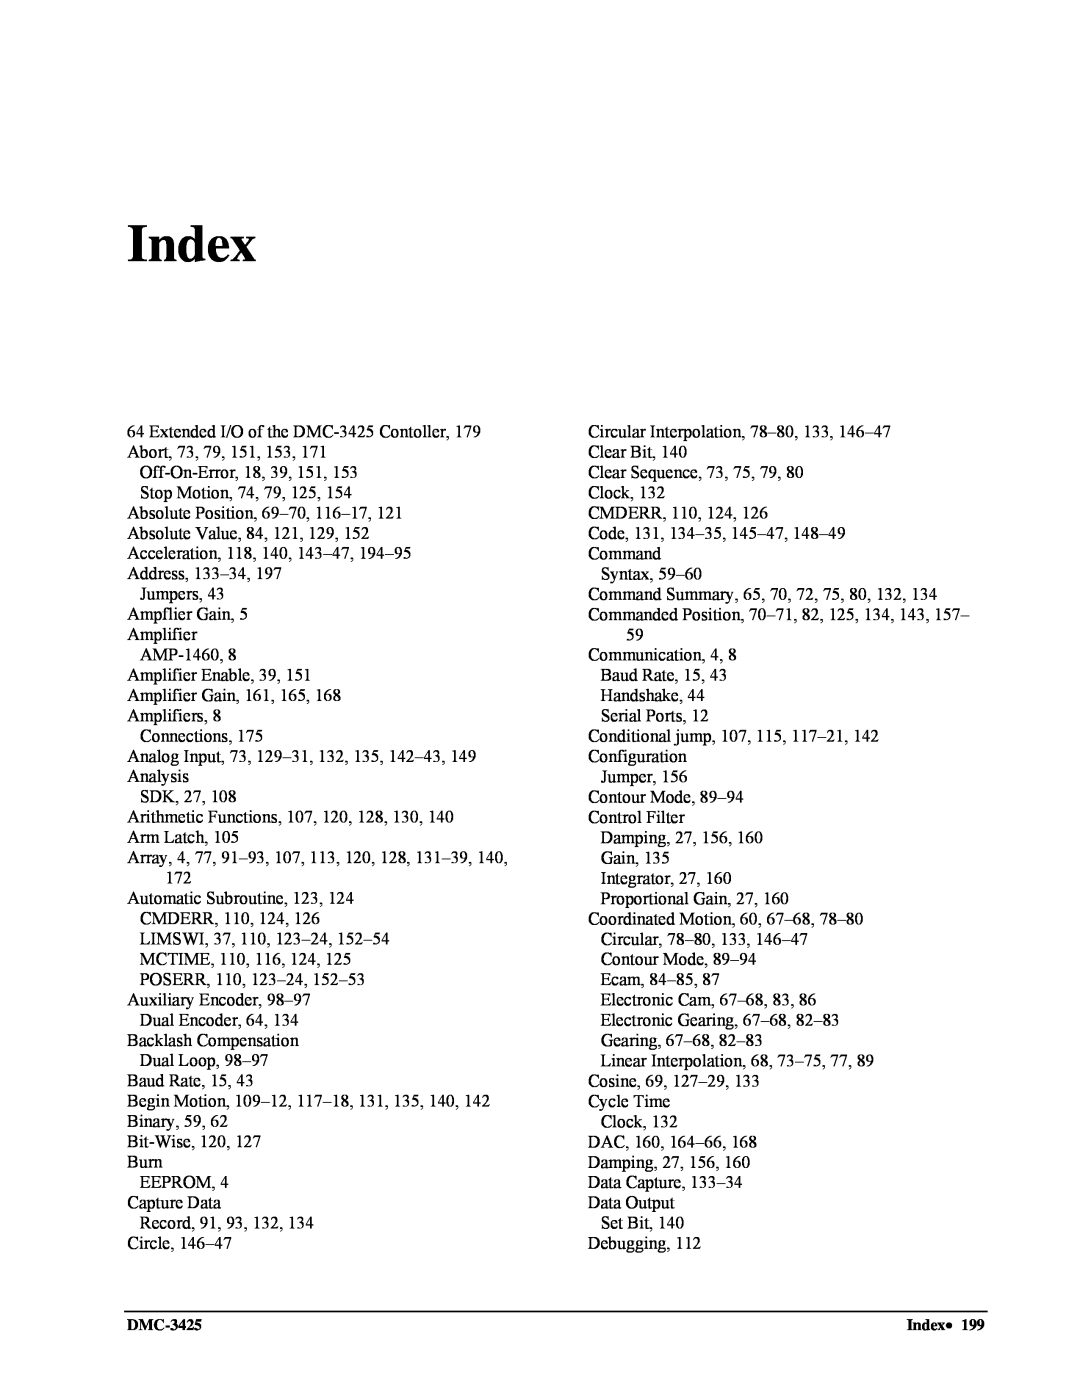 Galil DMC-3425 user manual Index 